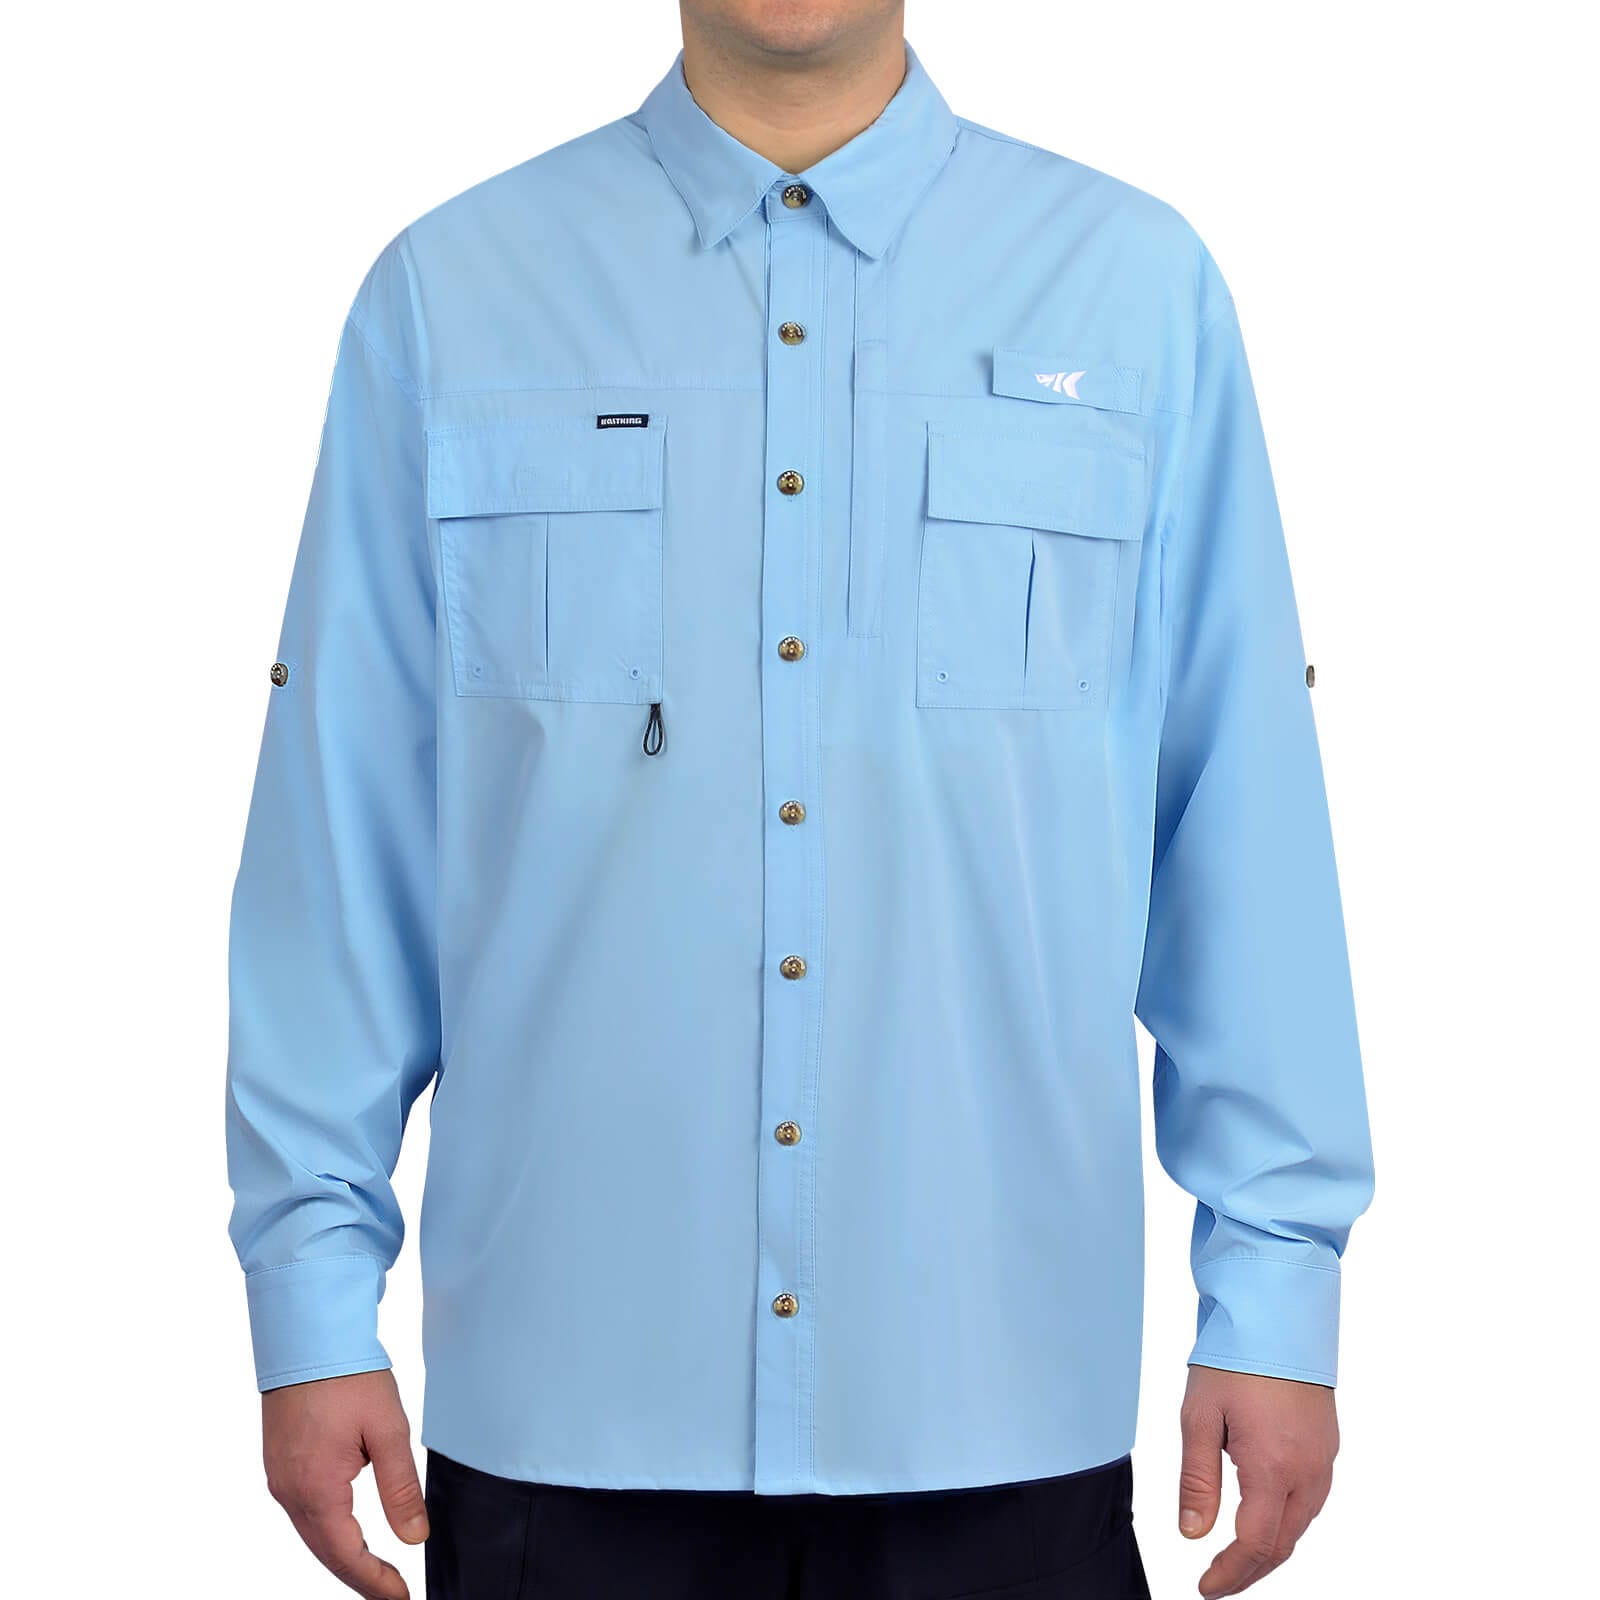  KastKing ReKon Men's Fishing Shirts Smart Design, UPF